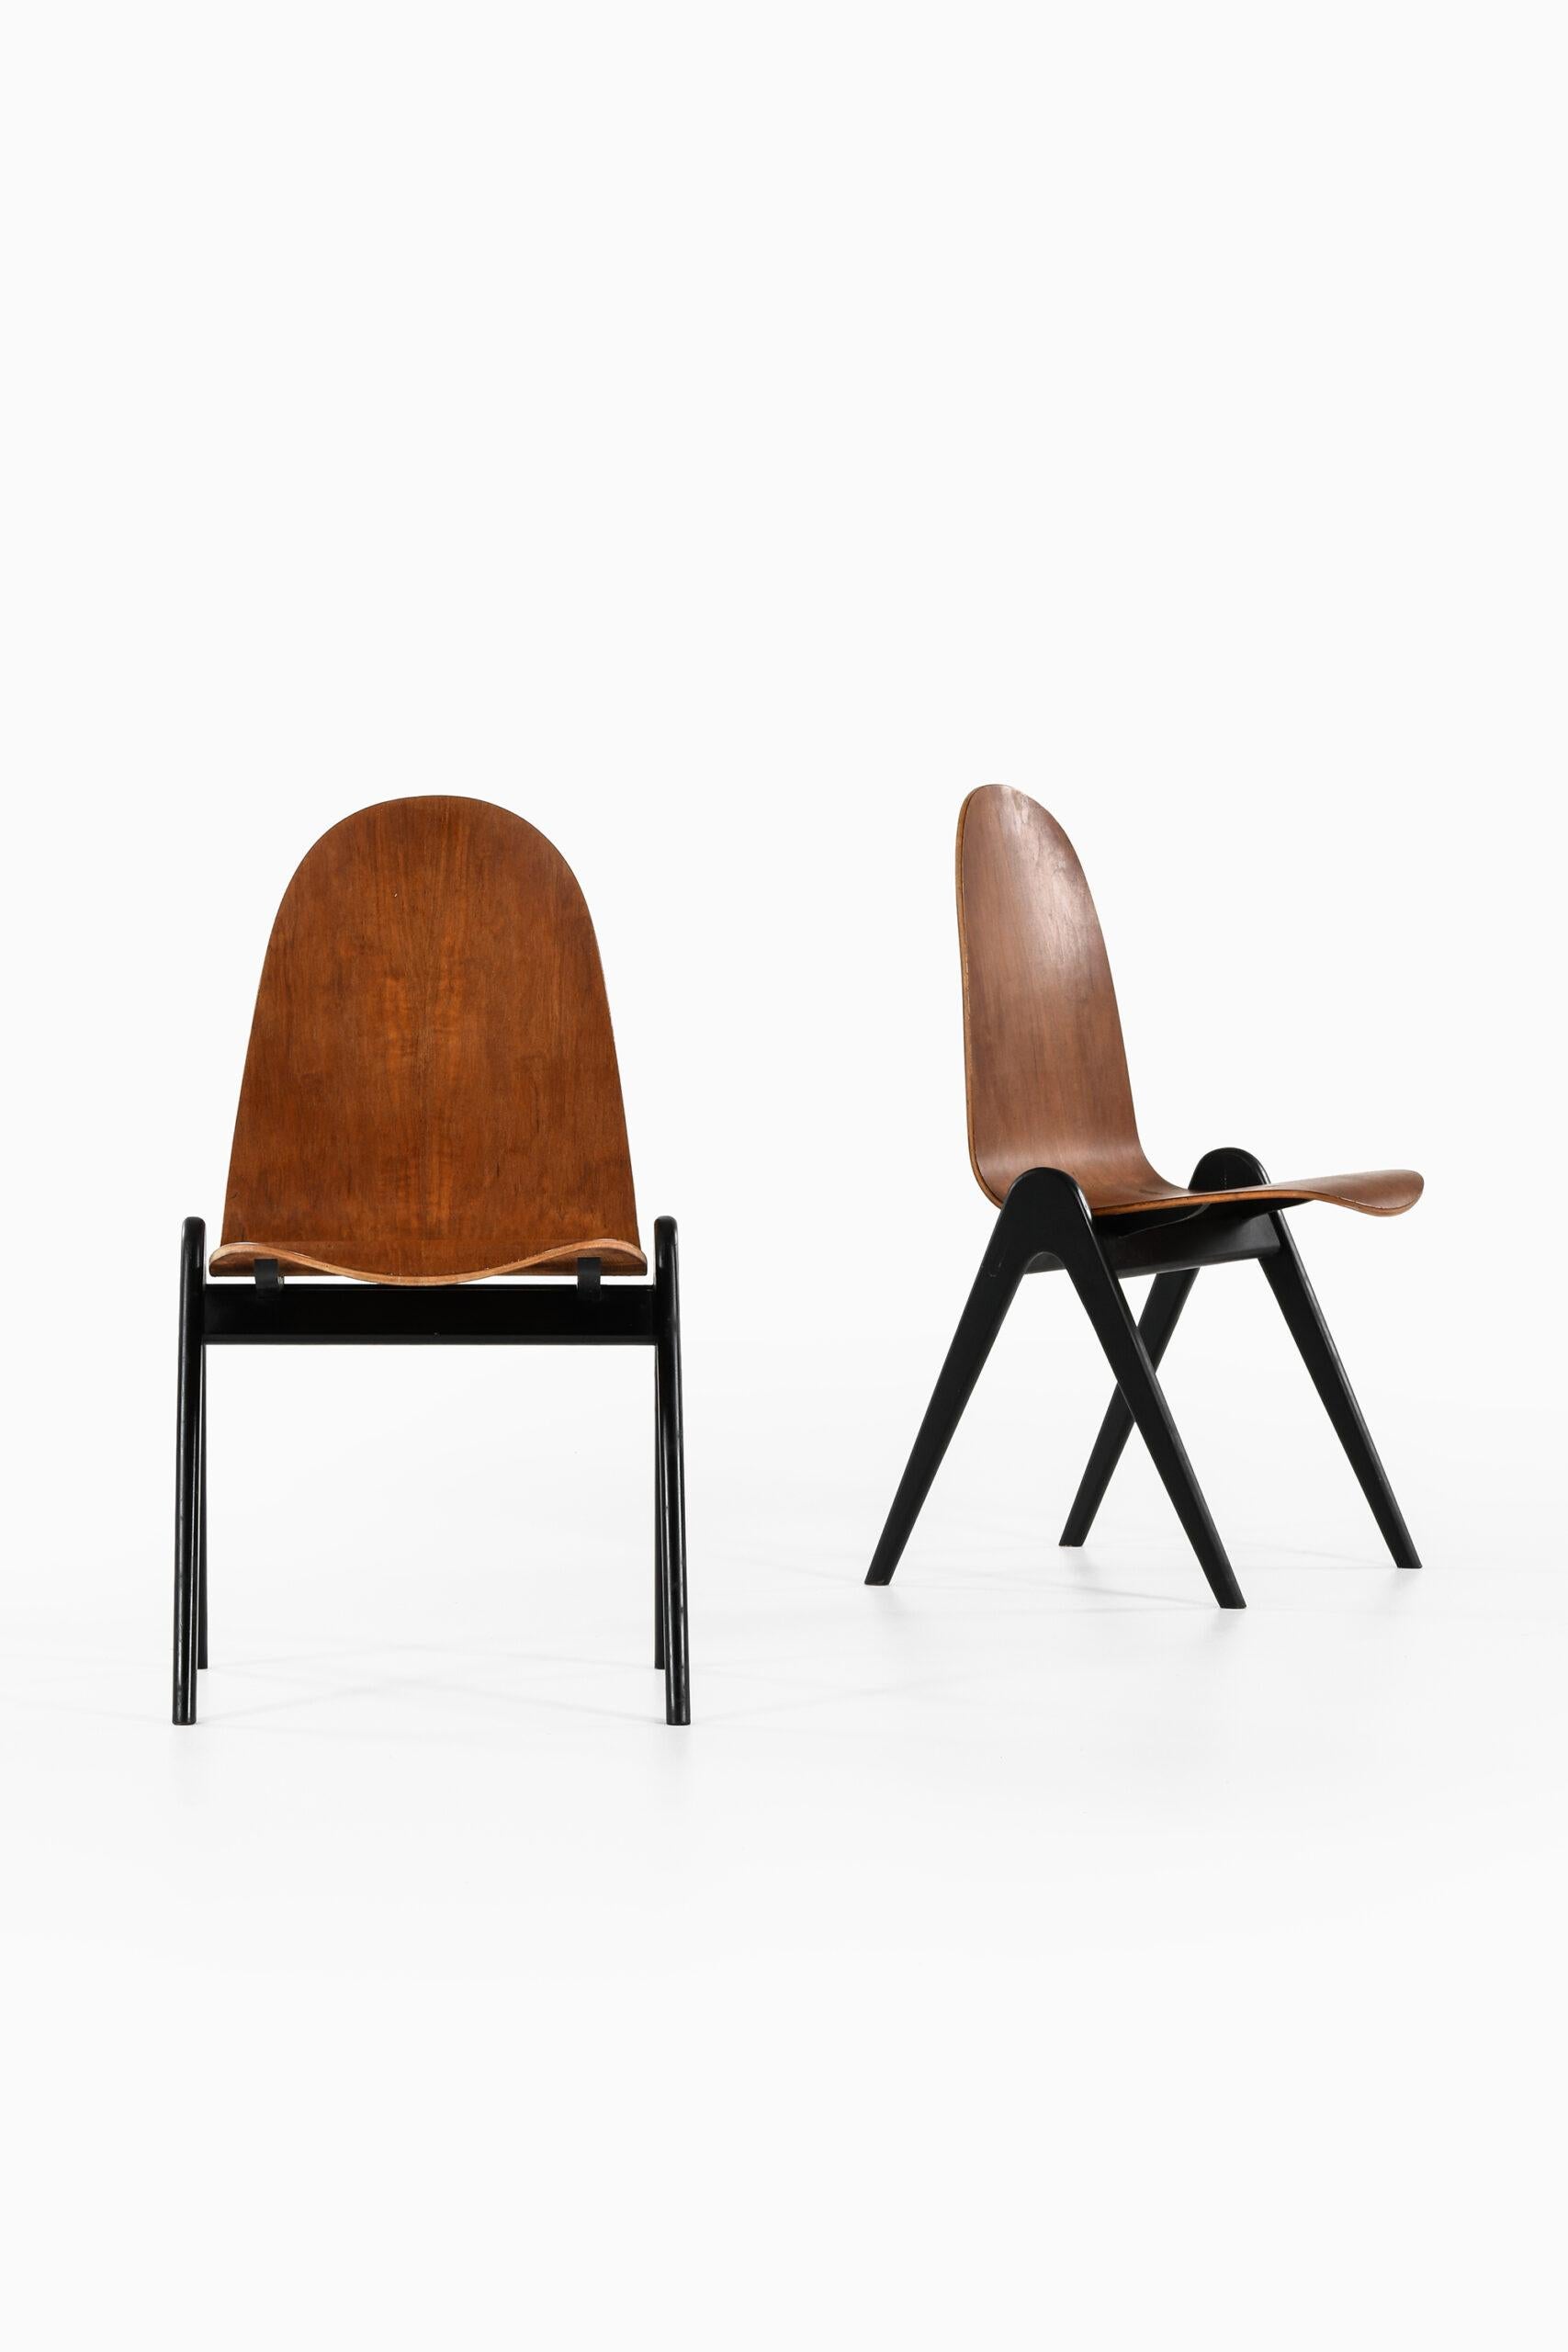 Rare set of 4 dining chairs ‘Knockdown’ designed by Yngve Ekström. Produced in Sweden.